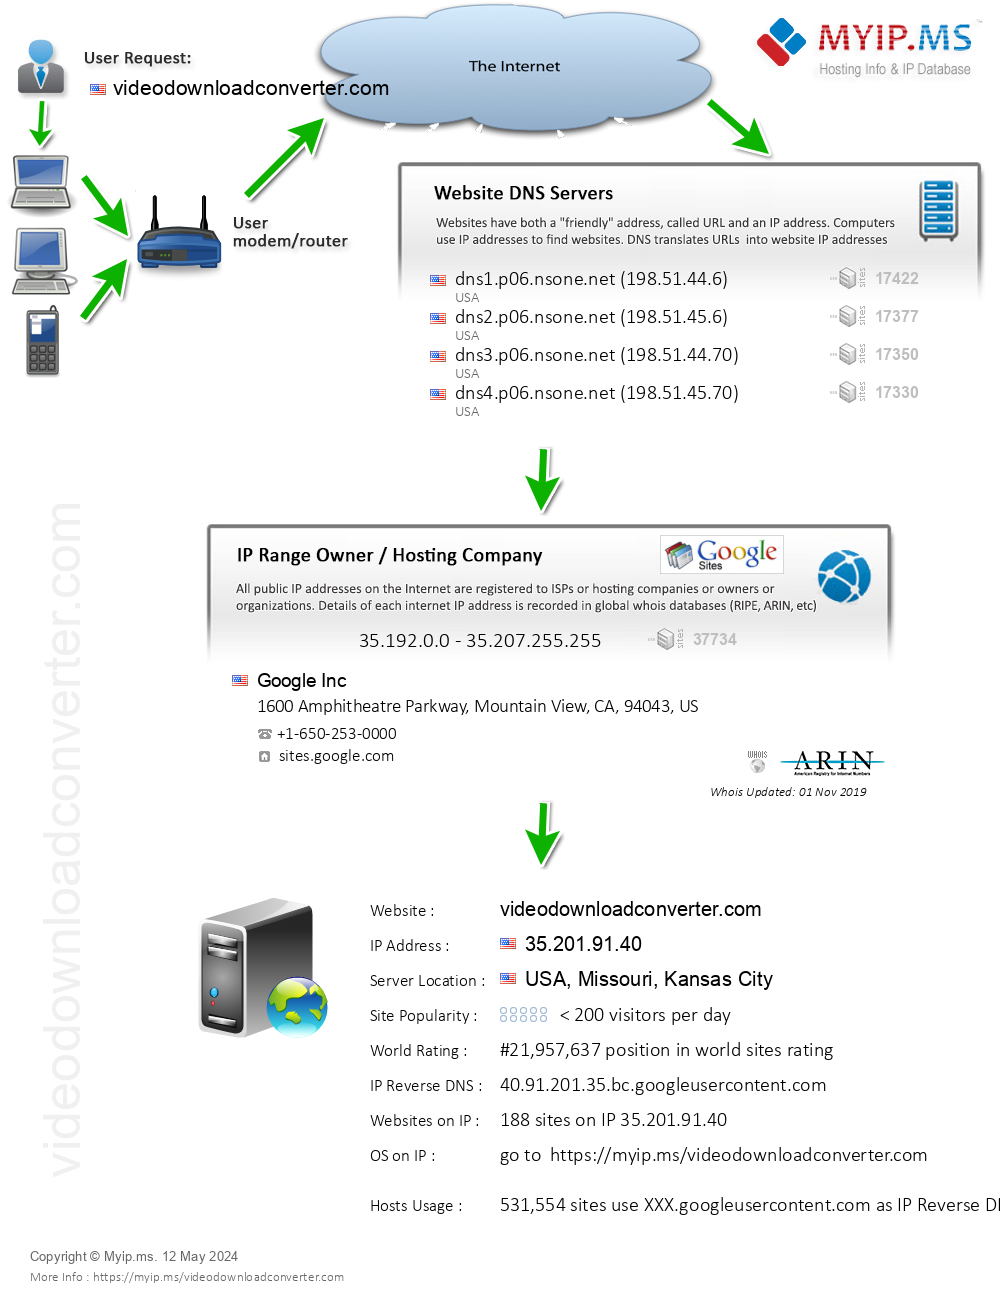 Videodownloadconverter.com - Website Hosting Visual IP Diagram